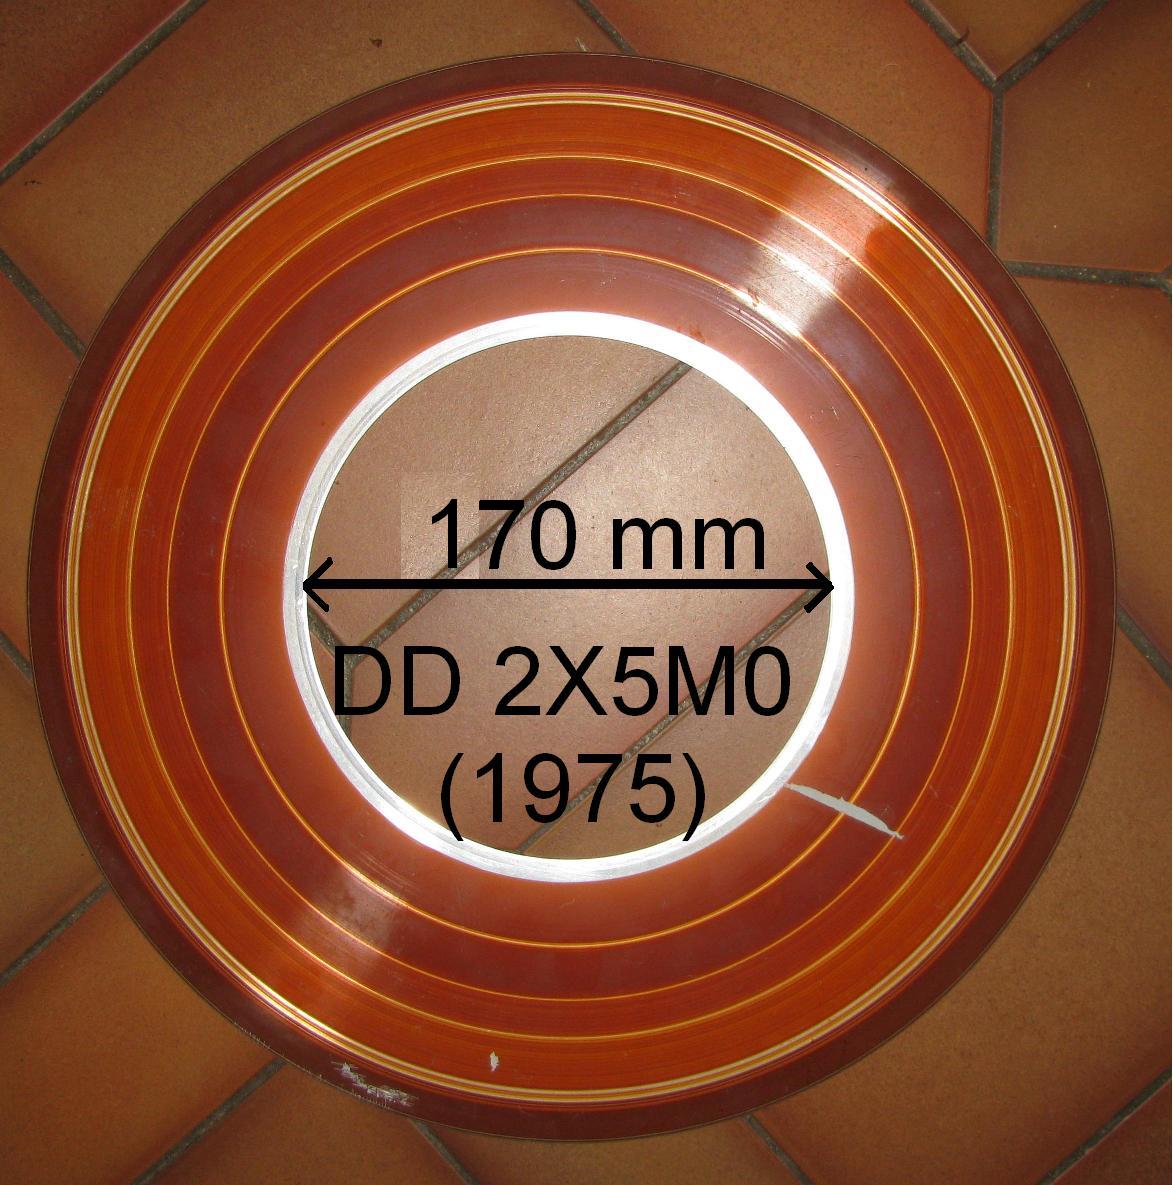 Nom : disque dur 1975 2x5Mo.JPG
Affichages : 148
Taille : 192,8 Ko